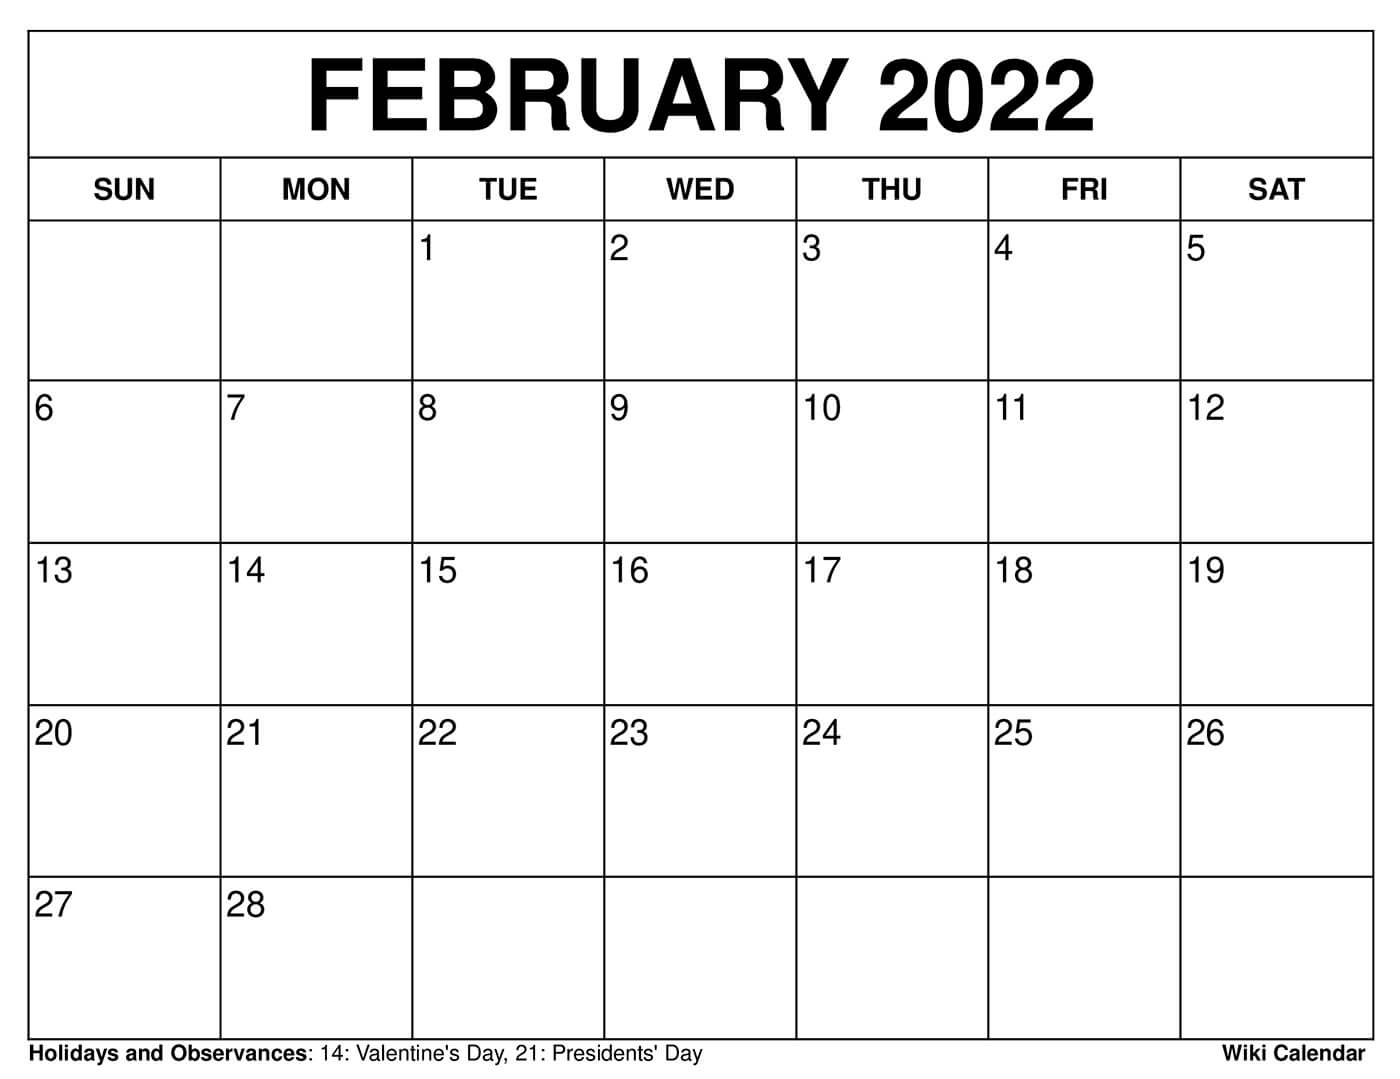 February 2022 Calendar Printable Free Free Printable February 2022 Calendars - Wiki Calendar